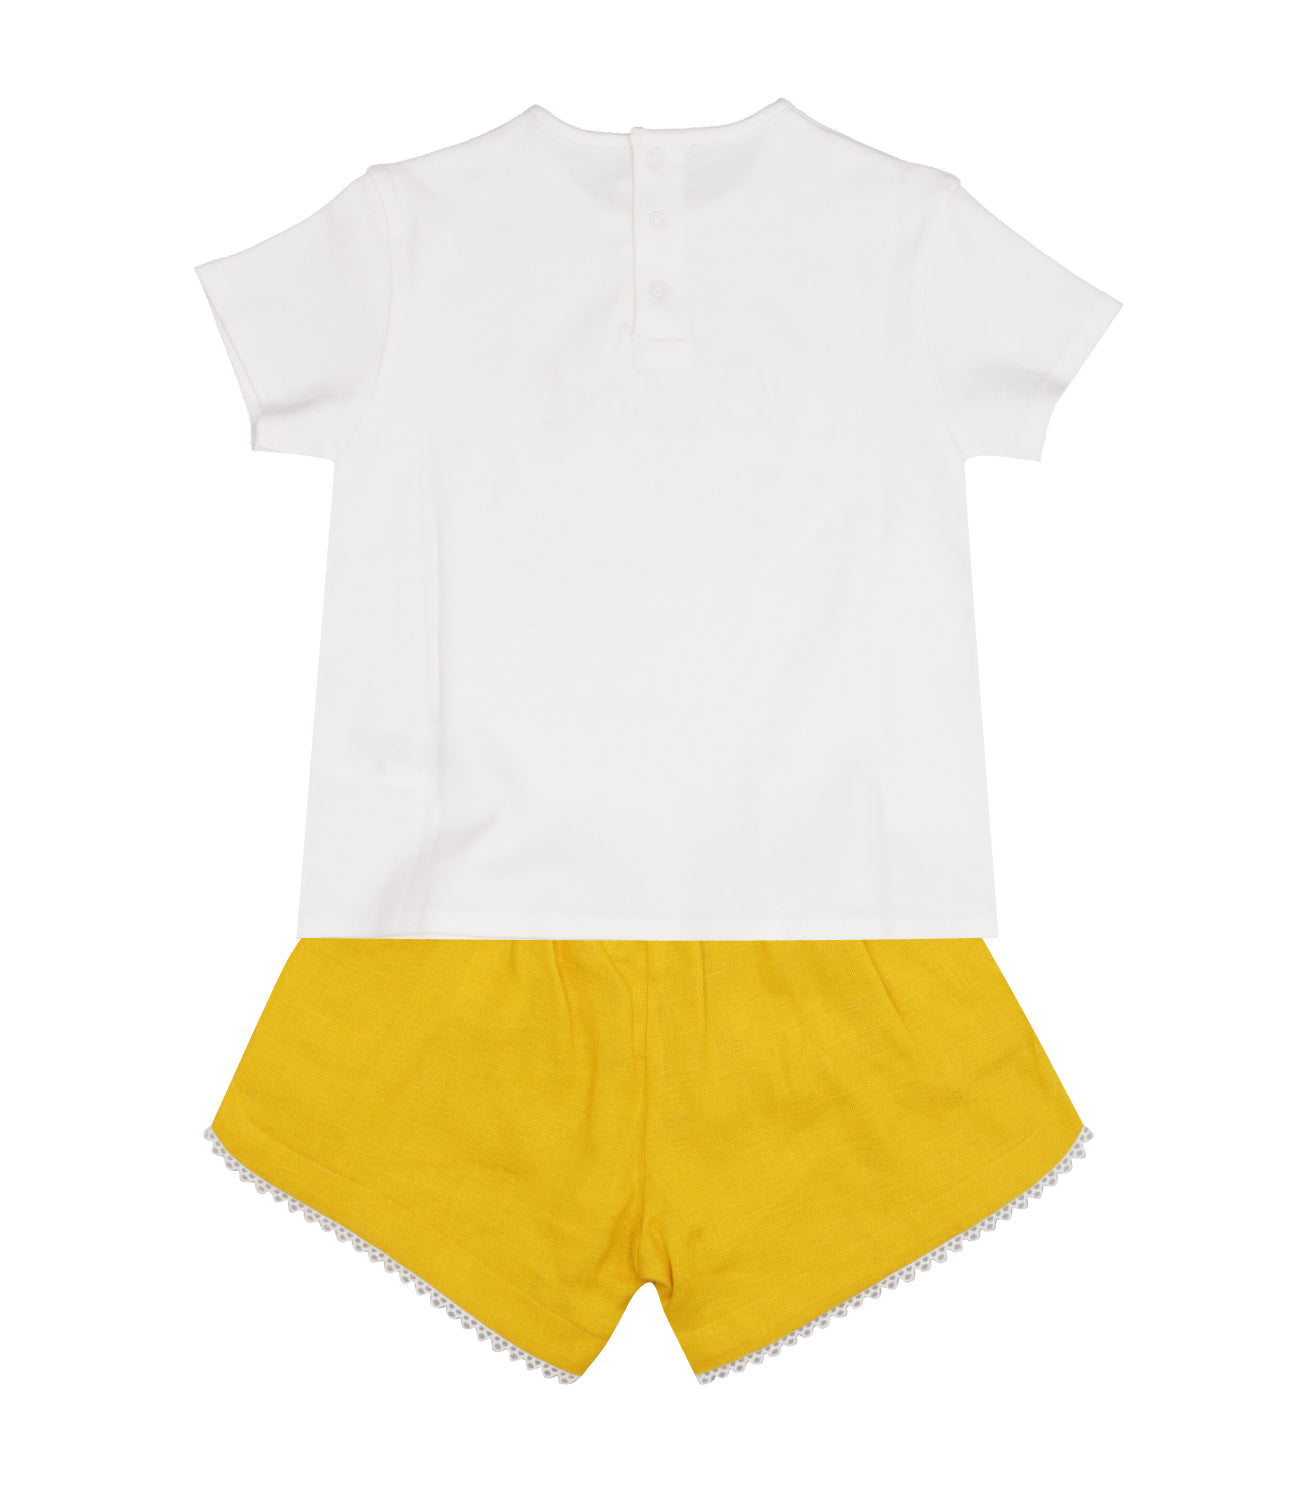 Chloè Kids | Set T-Shirt e Bermuda Bianco e Giallo